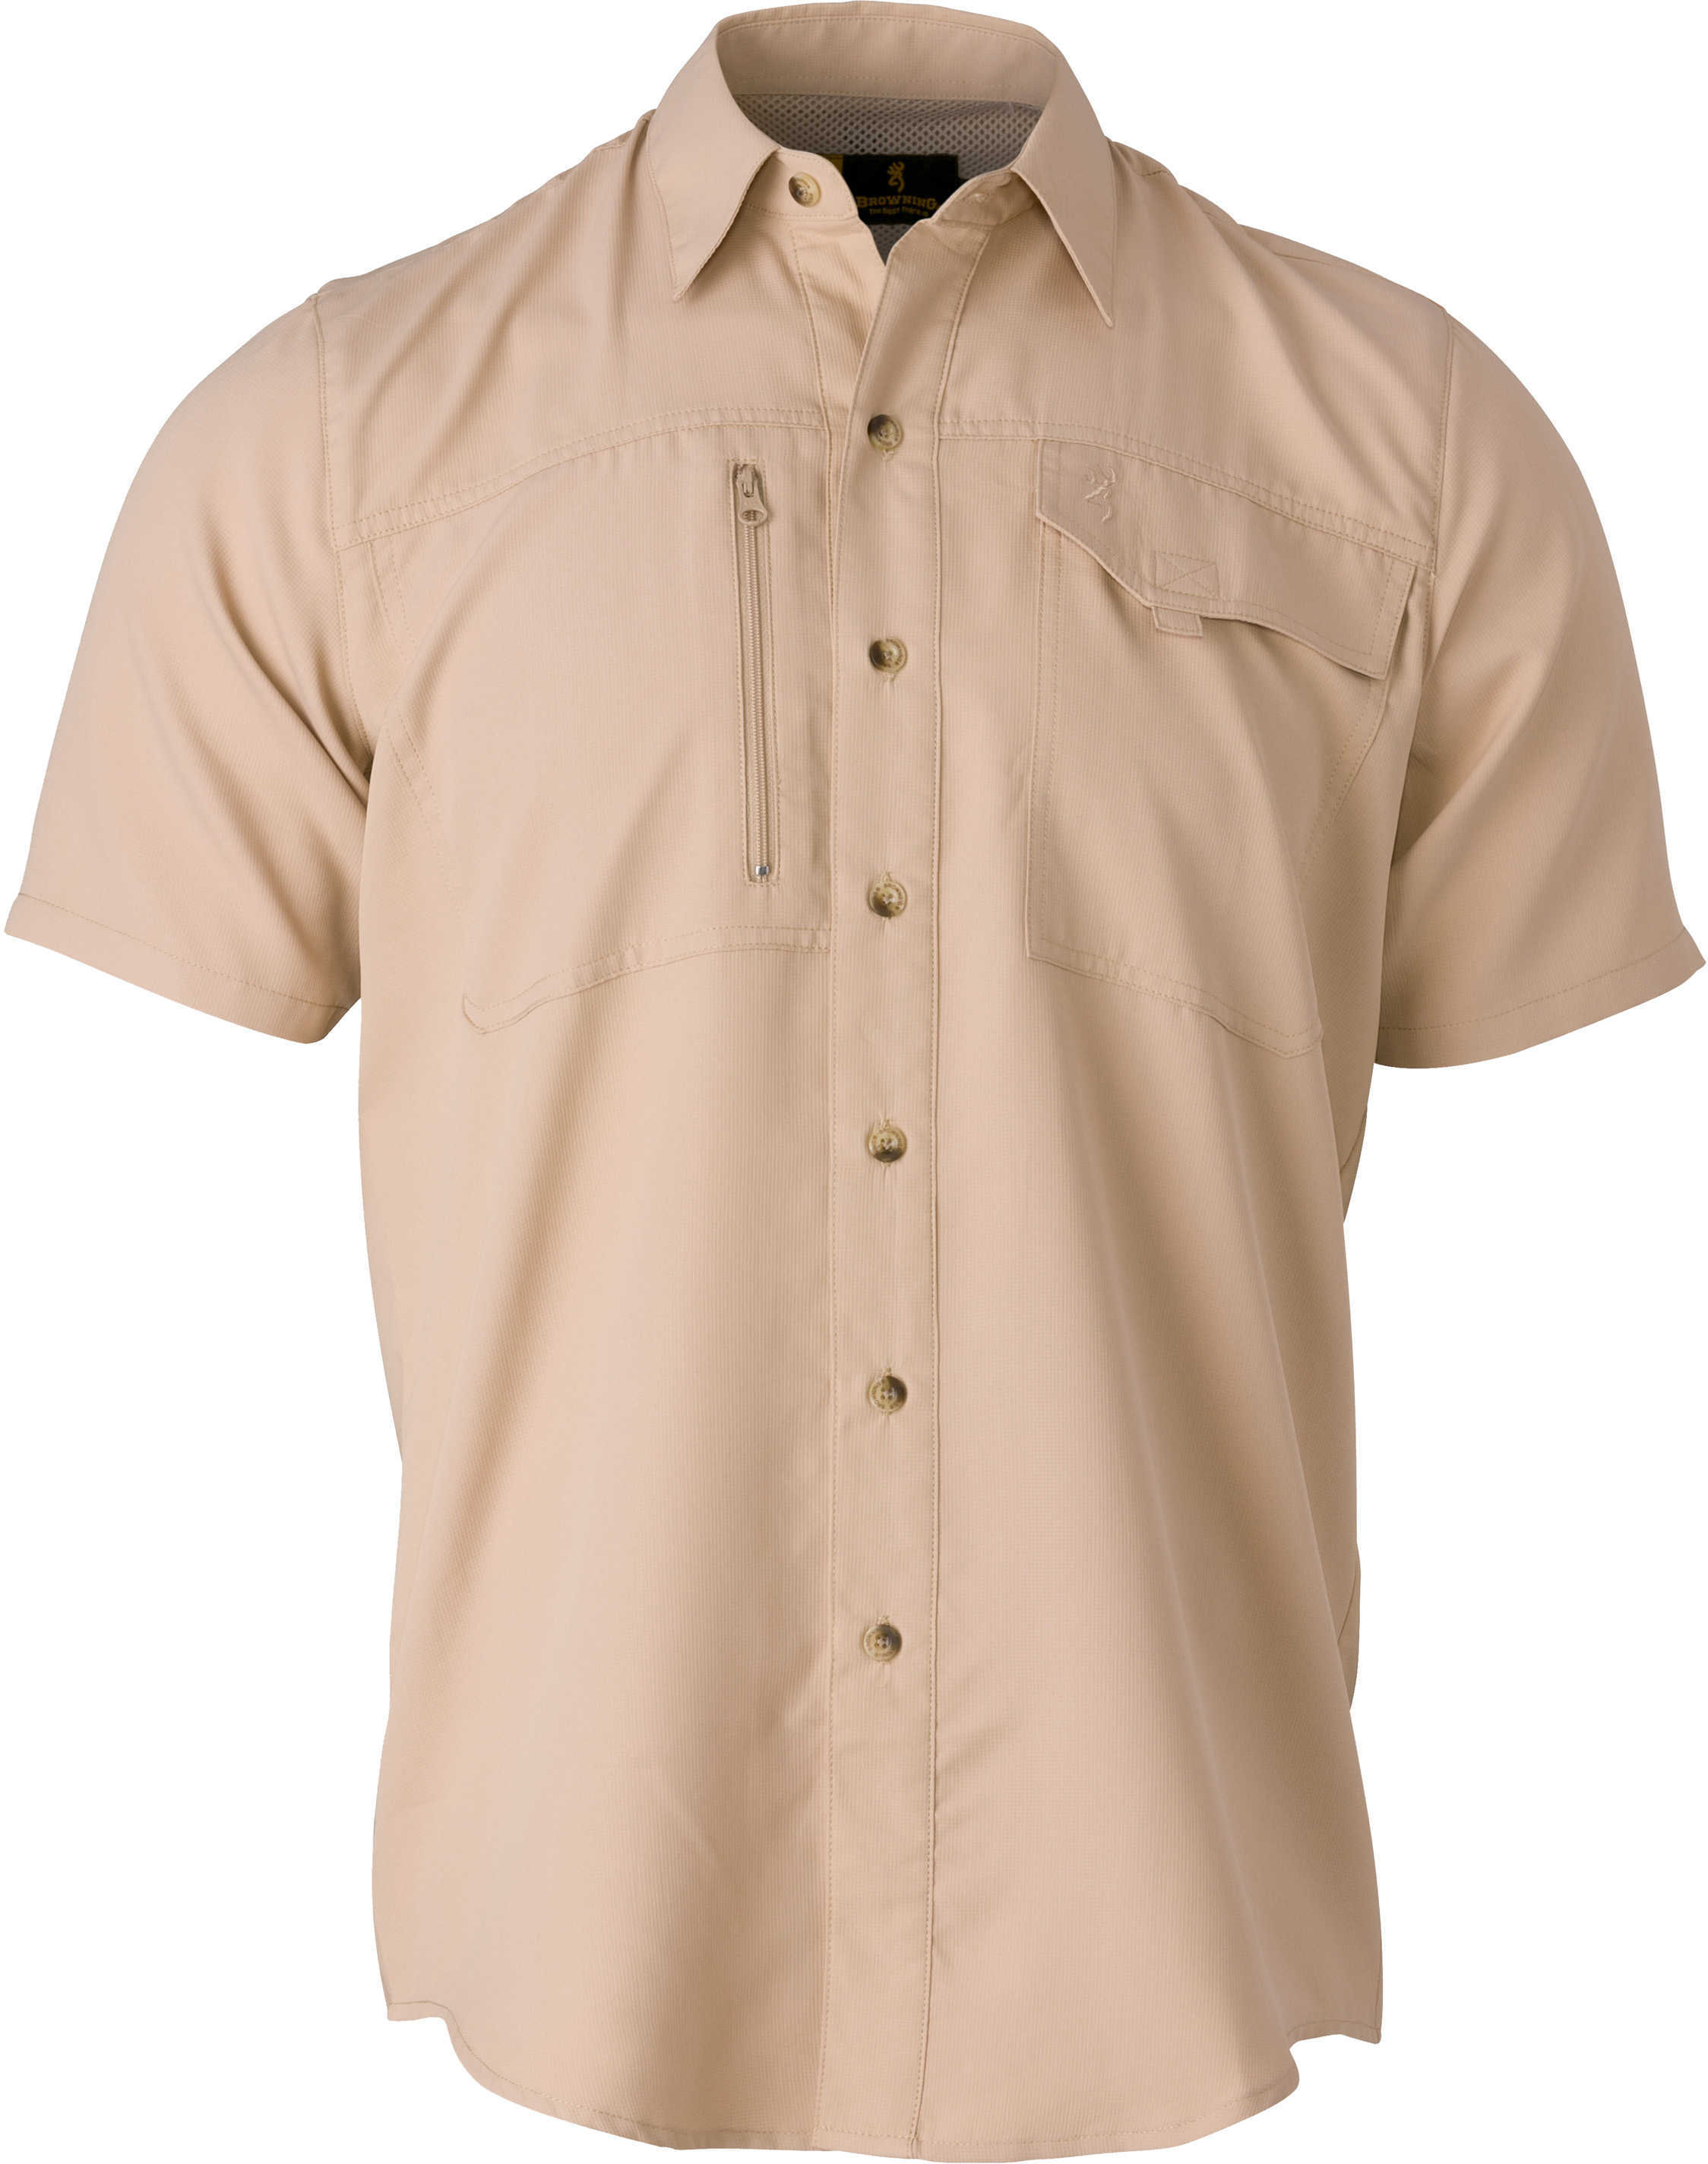 Browning Phenix Shooting Shirt - Short Sleeve, Khaki, X-Large Md: 3010765804